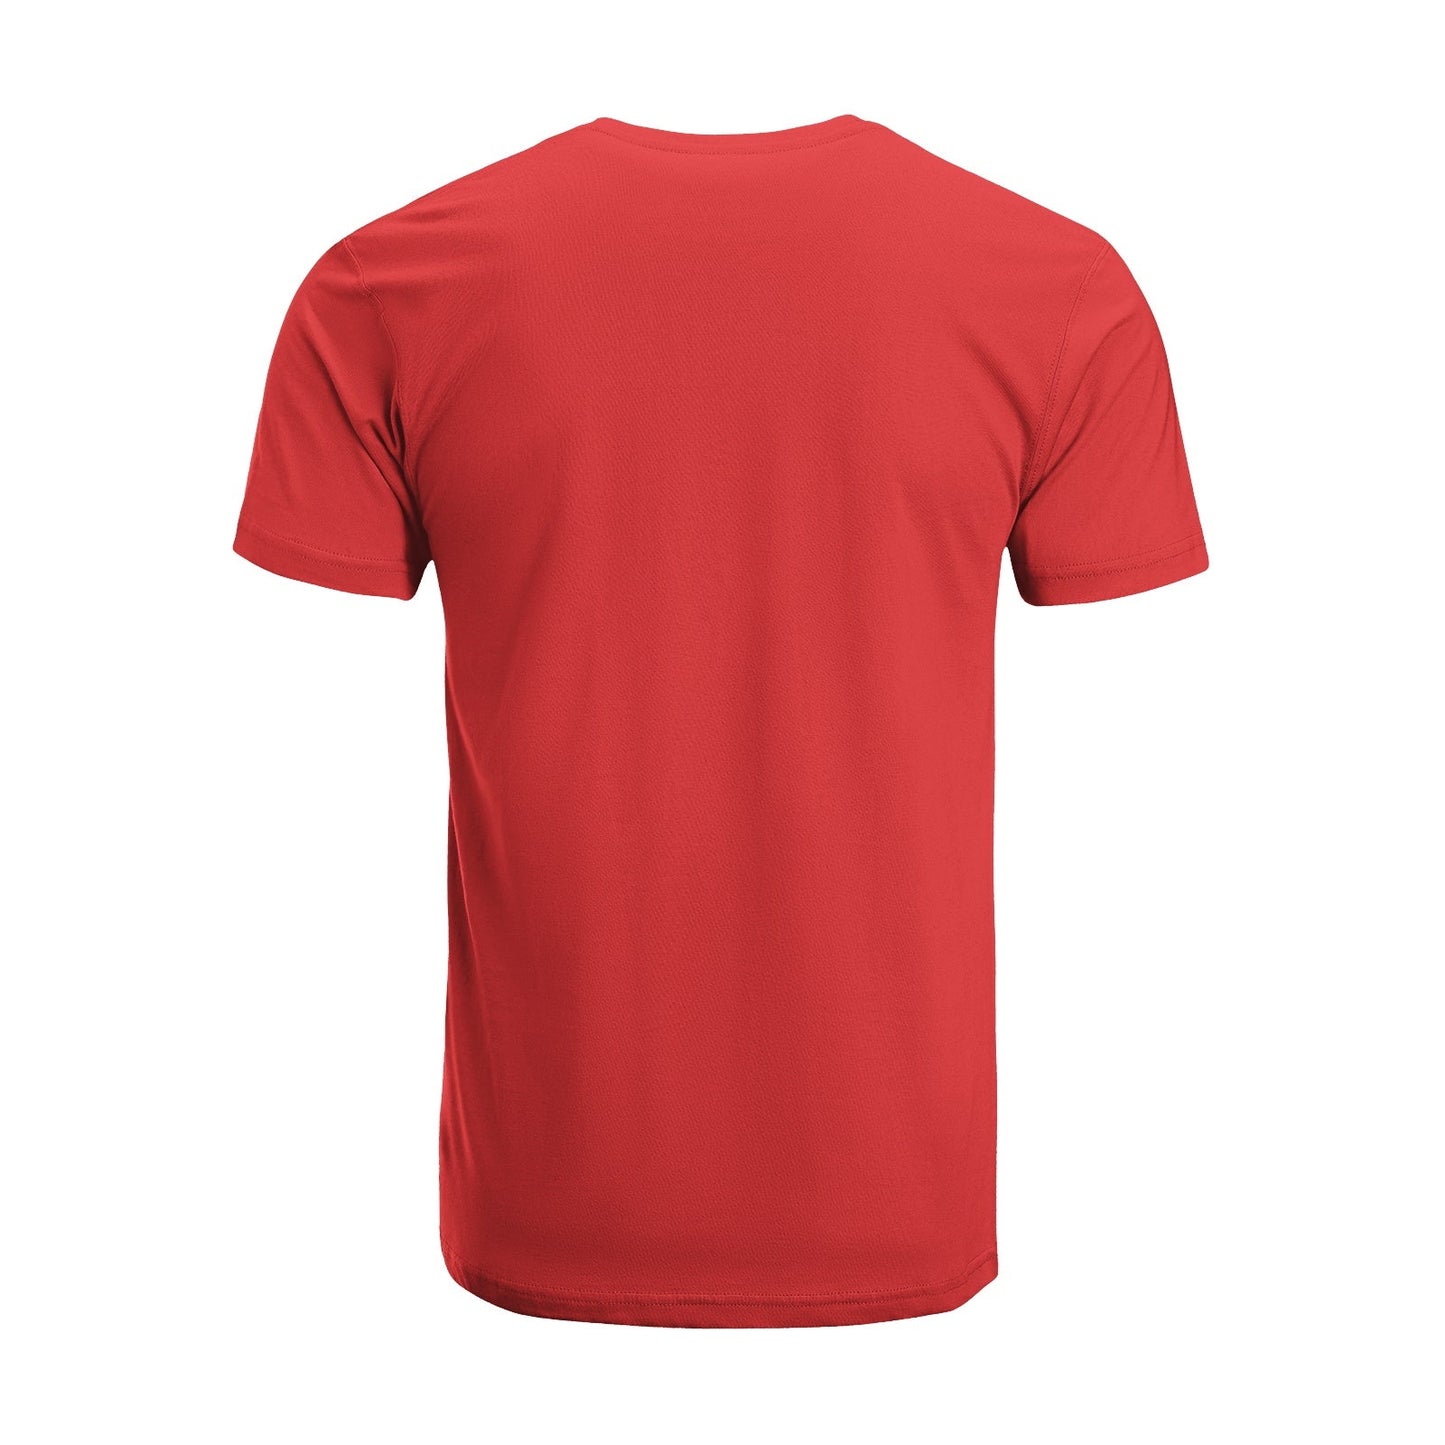 Unisex Short Sleeve Crew Neck Cotton Jersey T-Shirt USA 17